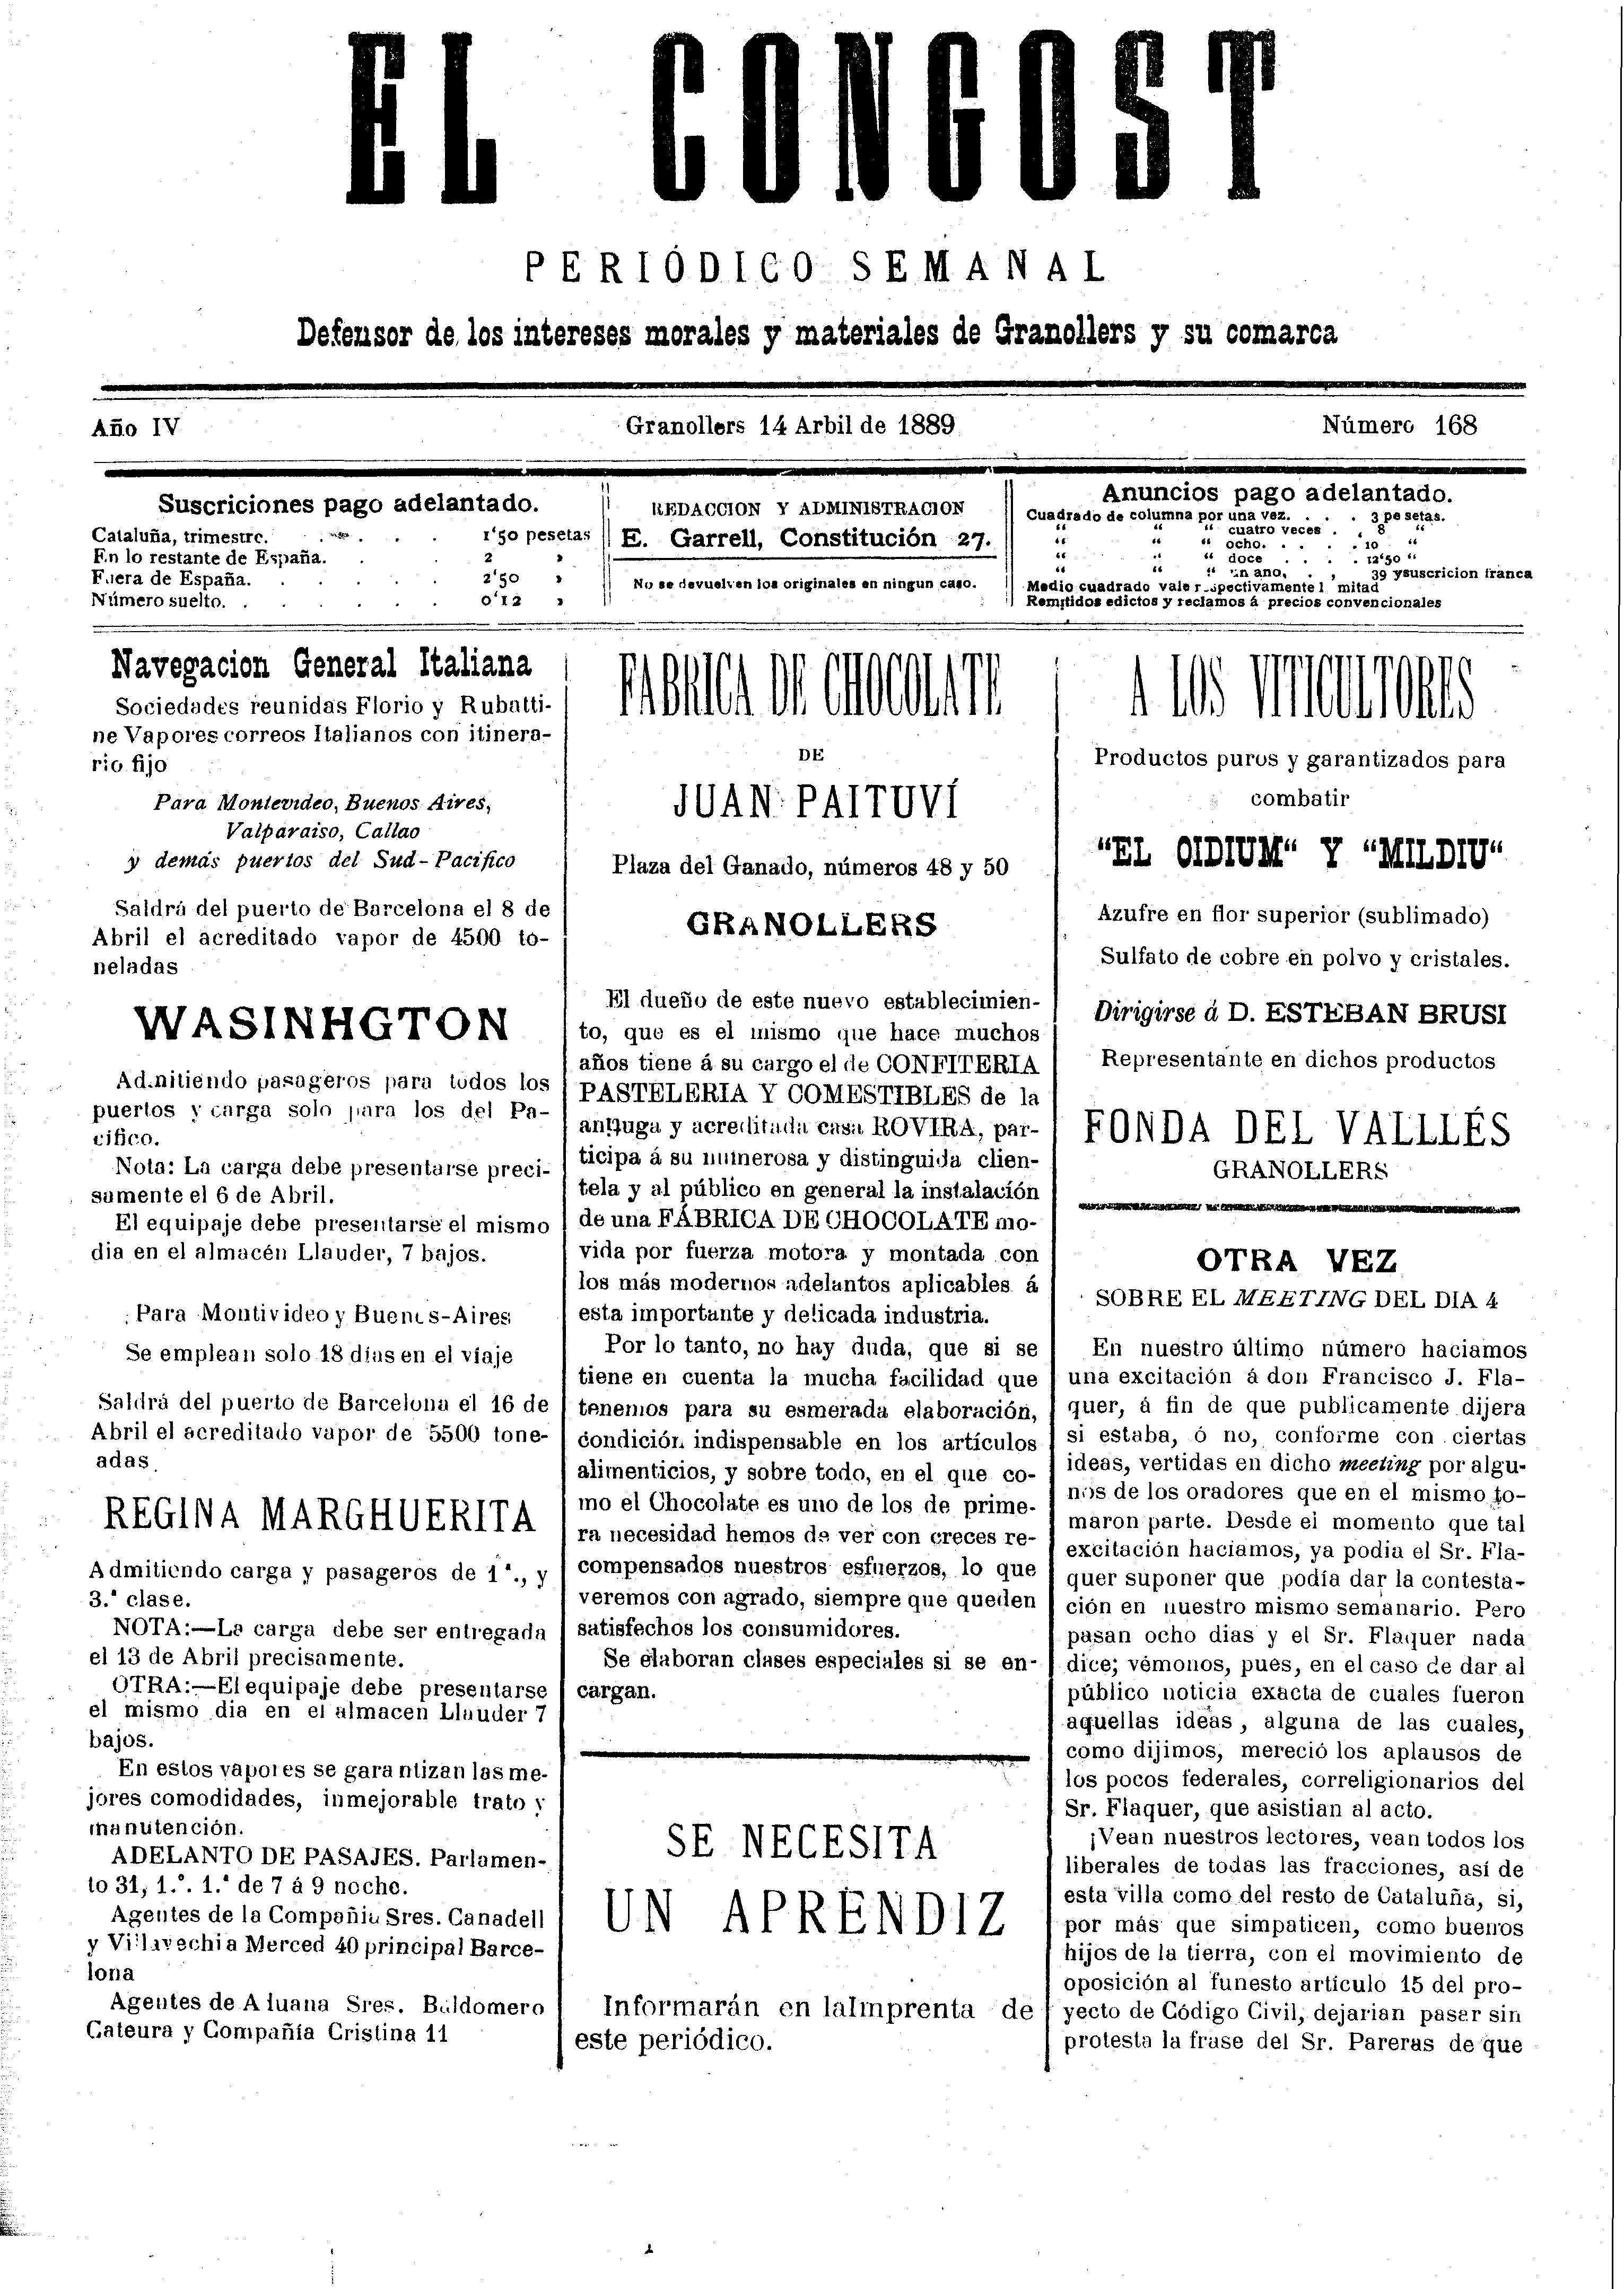 El Congost, 14/4/1889 [Exemplar]